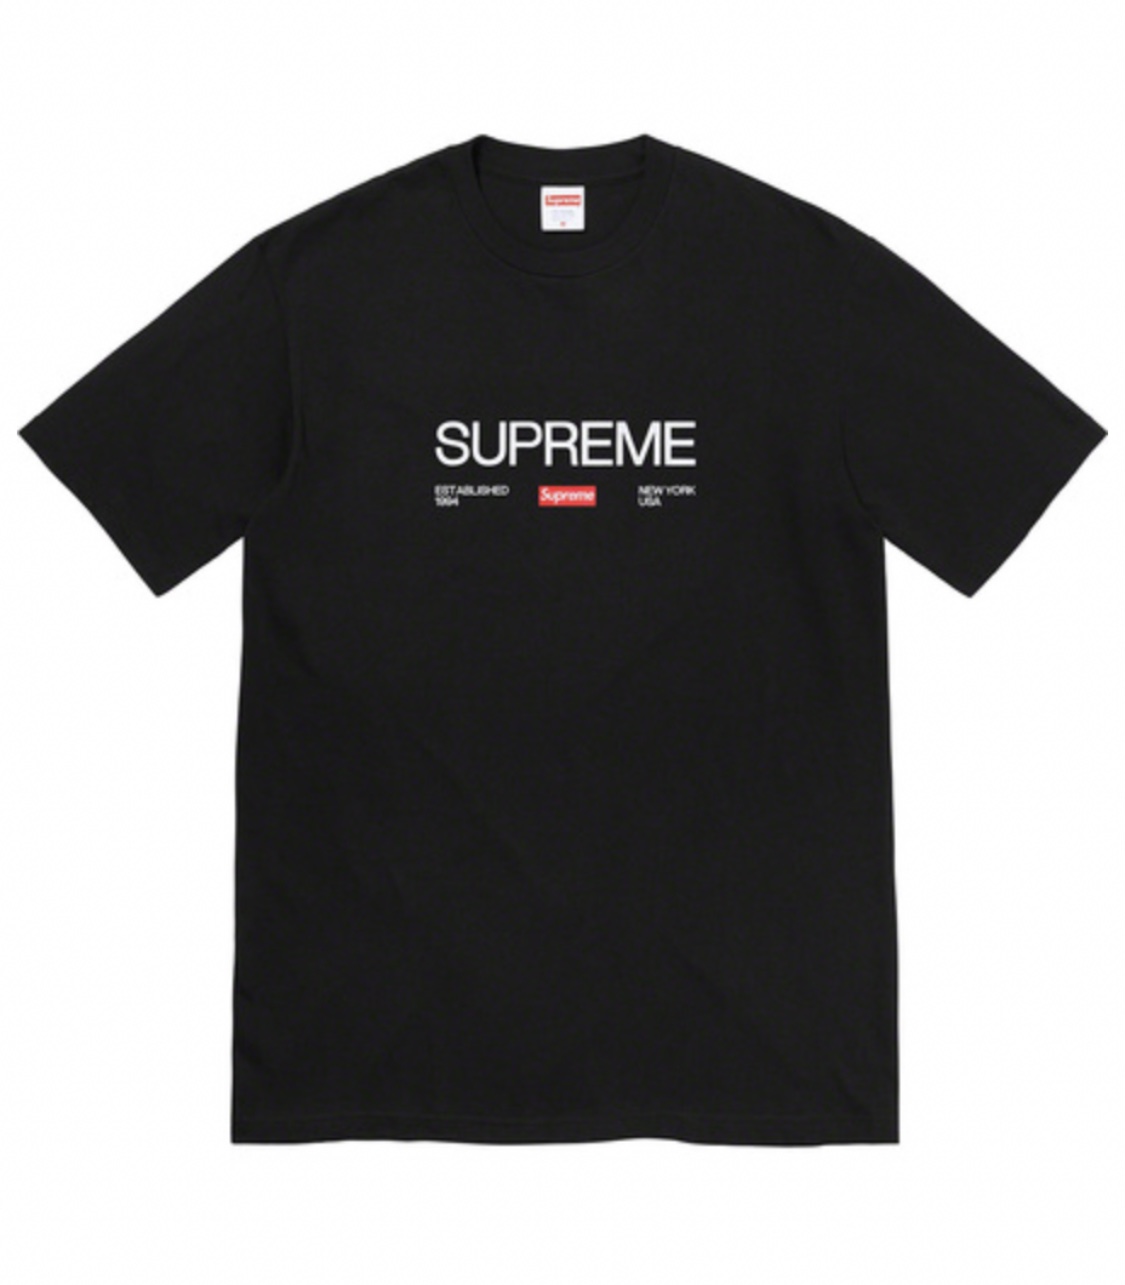 Supreme Est. 1994 Tee - Black